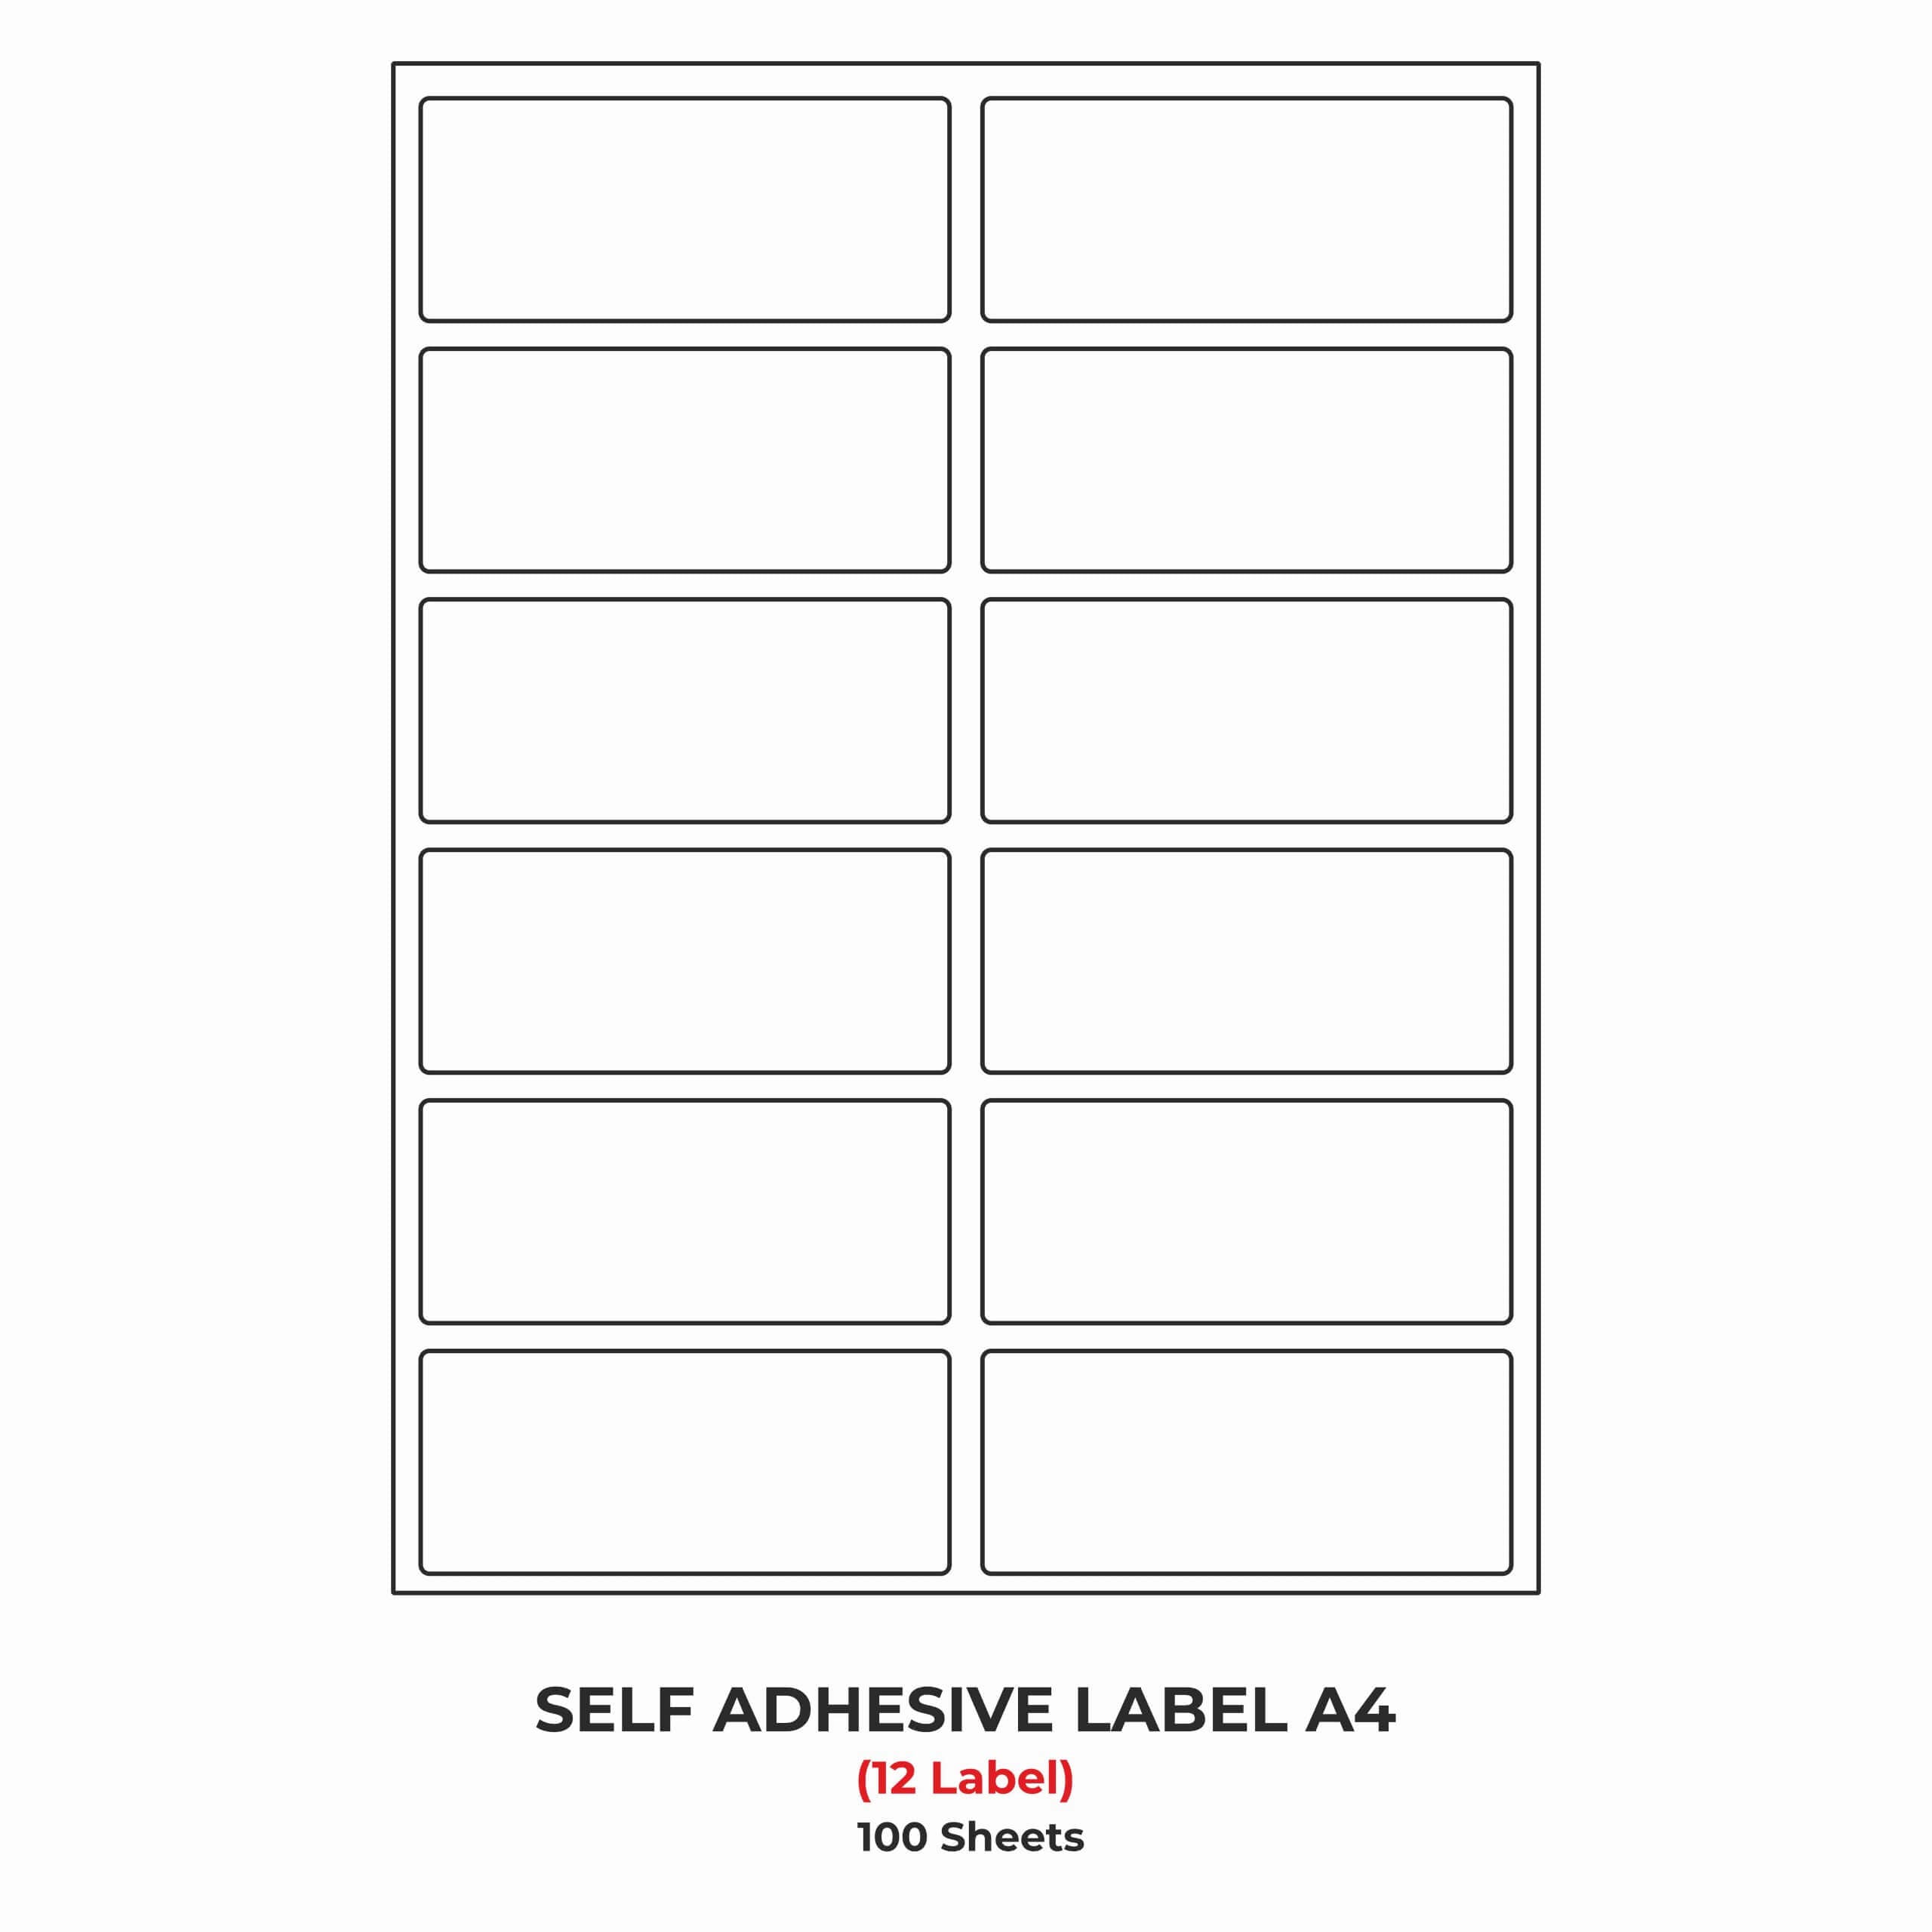 A4 (ST12) Address Label (100mm x 44mm x 12) (Self Adhesive Label for Inkjet/Copier/Laser Printer)